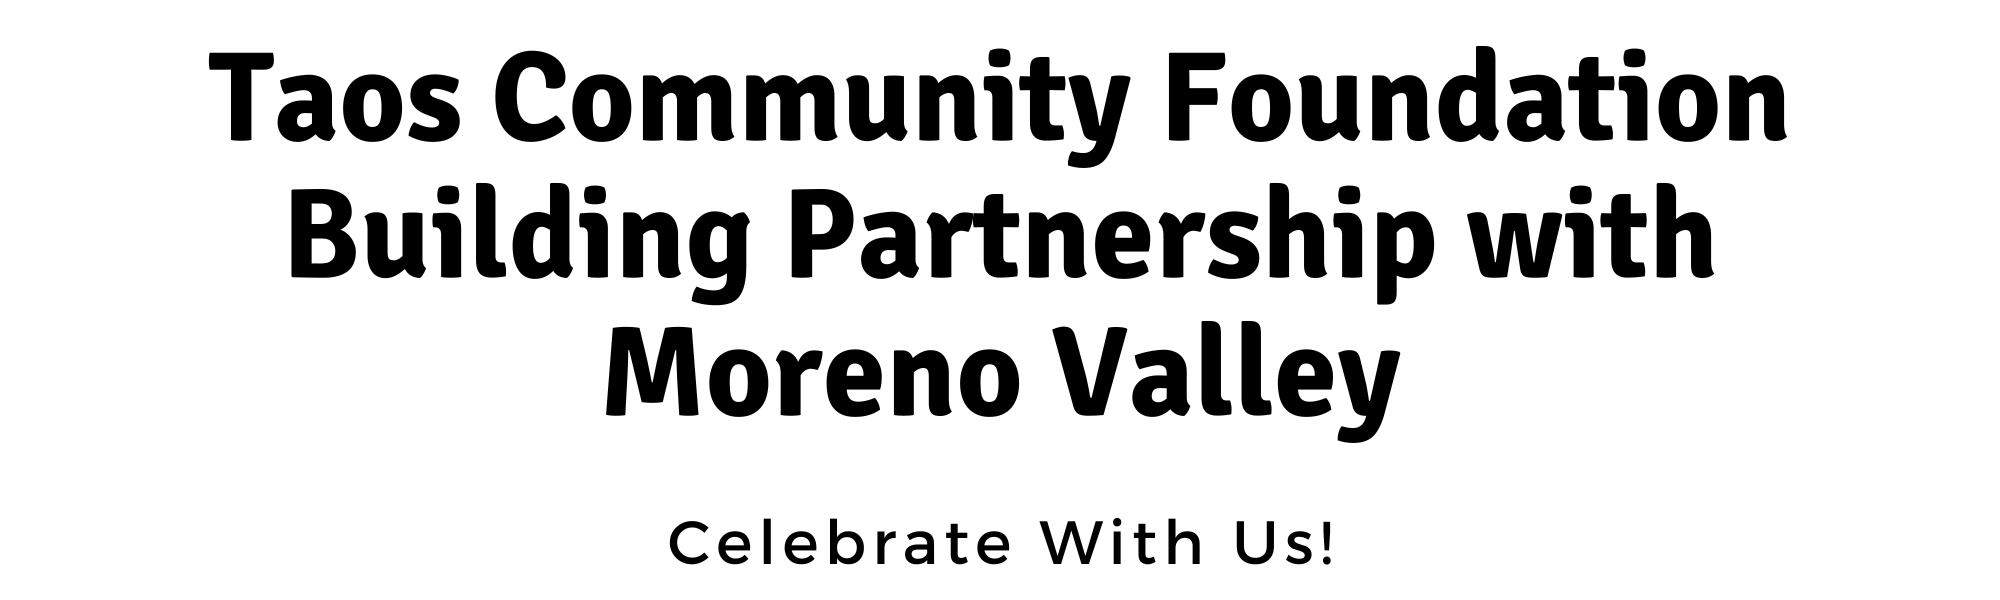 Taos Community Foundation Building Partnership with Moreno Valley.